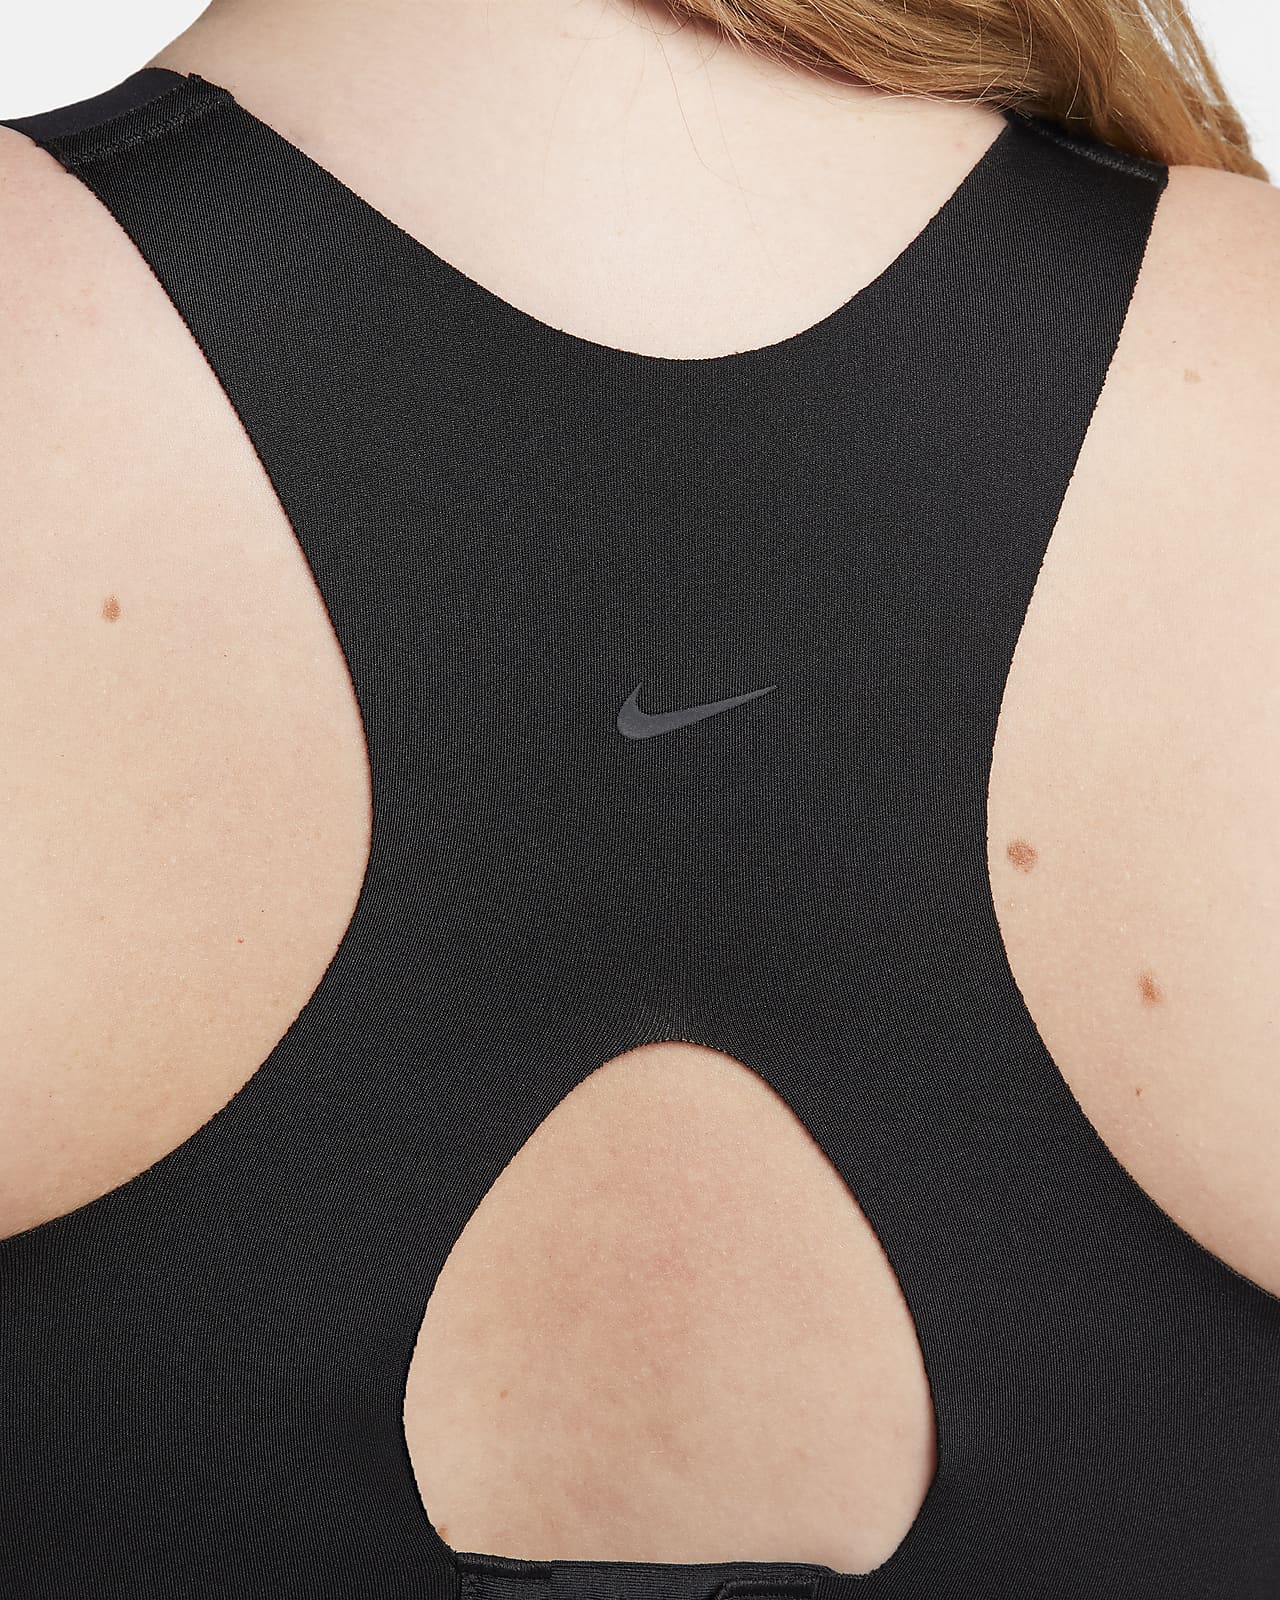 Nike Training Dri-FIT Swoosh zip-front medium-support bra in gray